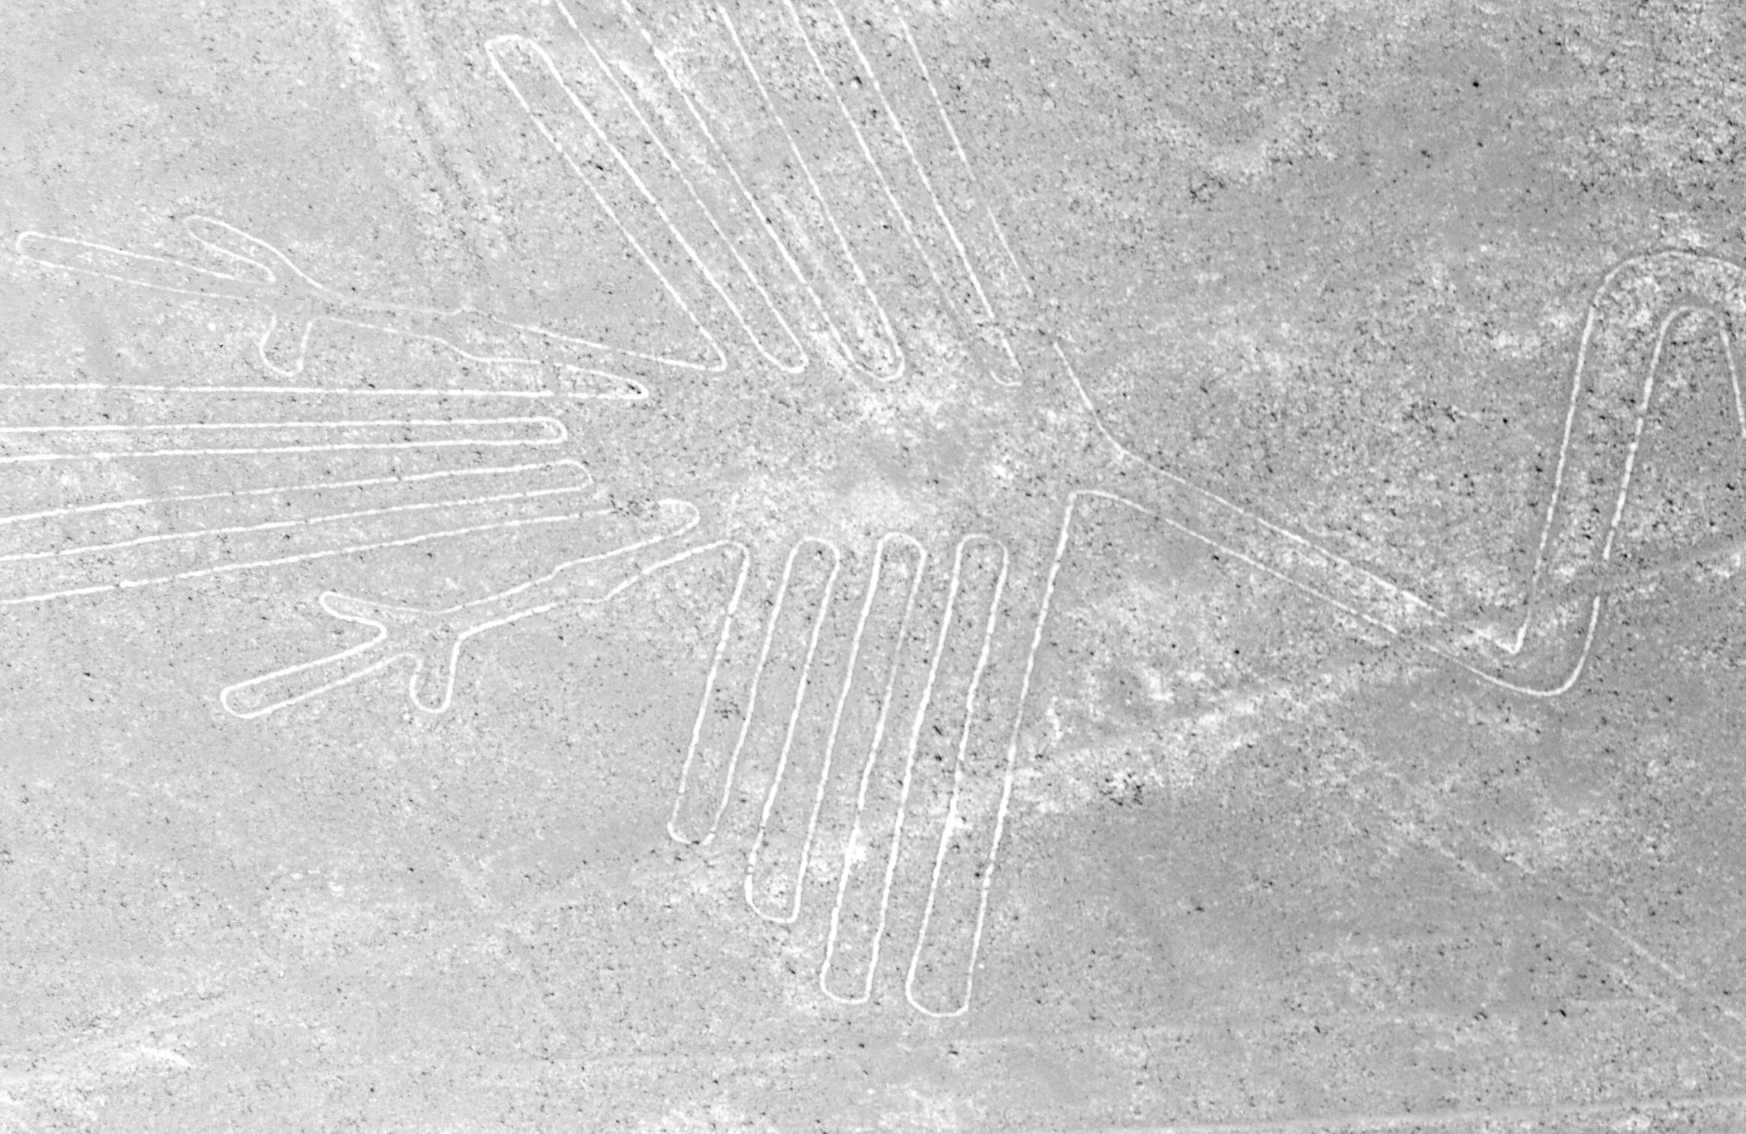 Nazca_lines_stork.jpg